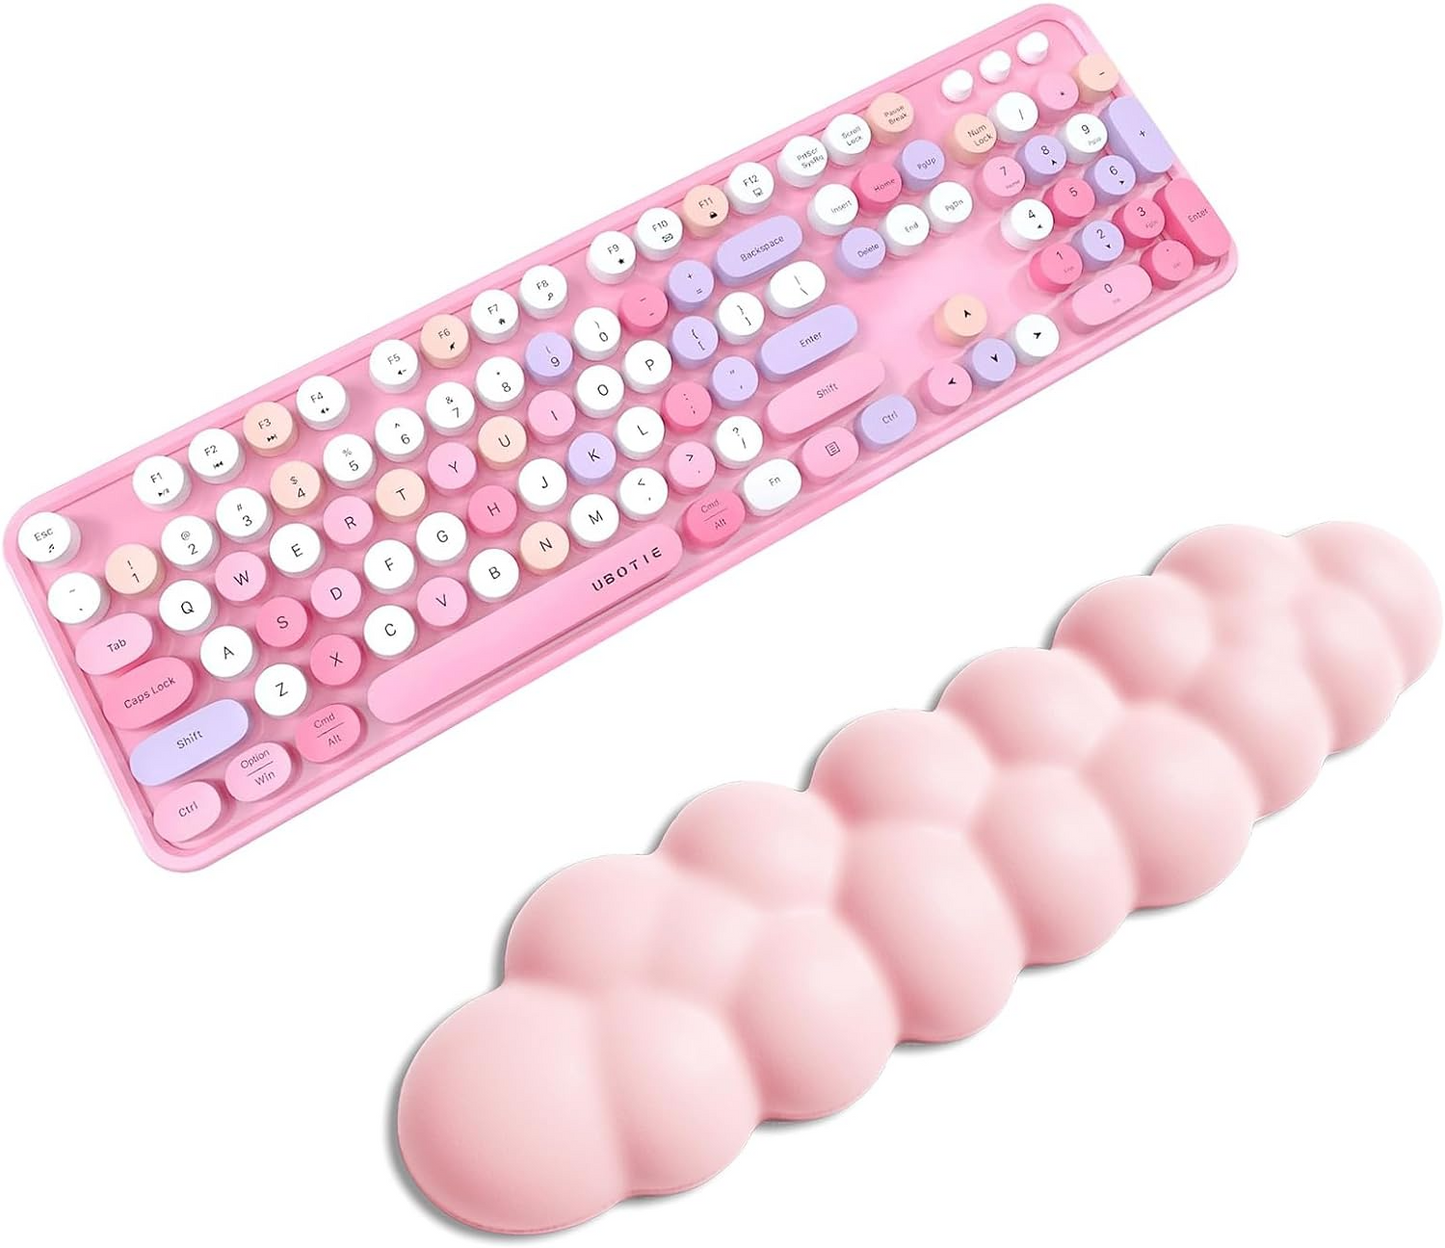 Cloud Wrist Rest For keyboard Pink